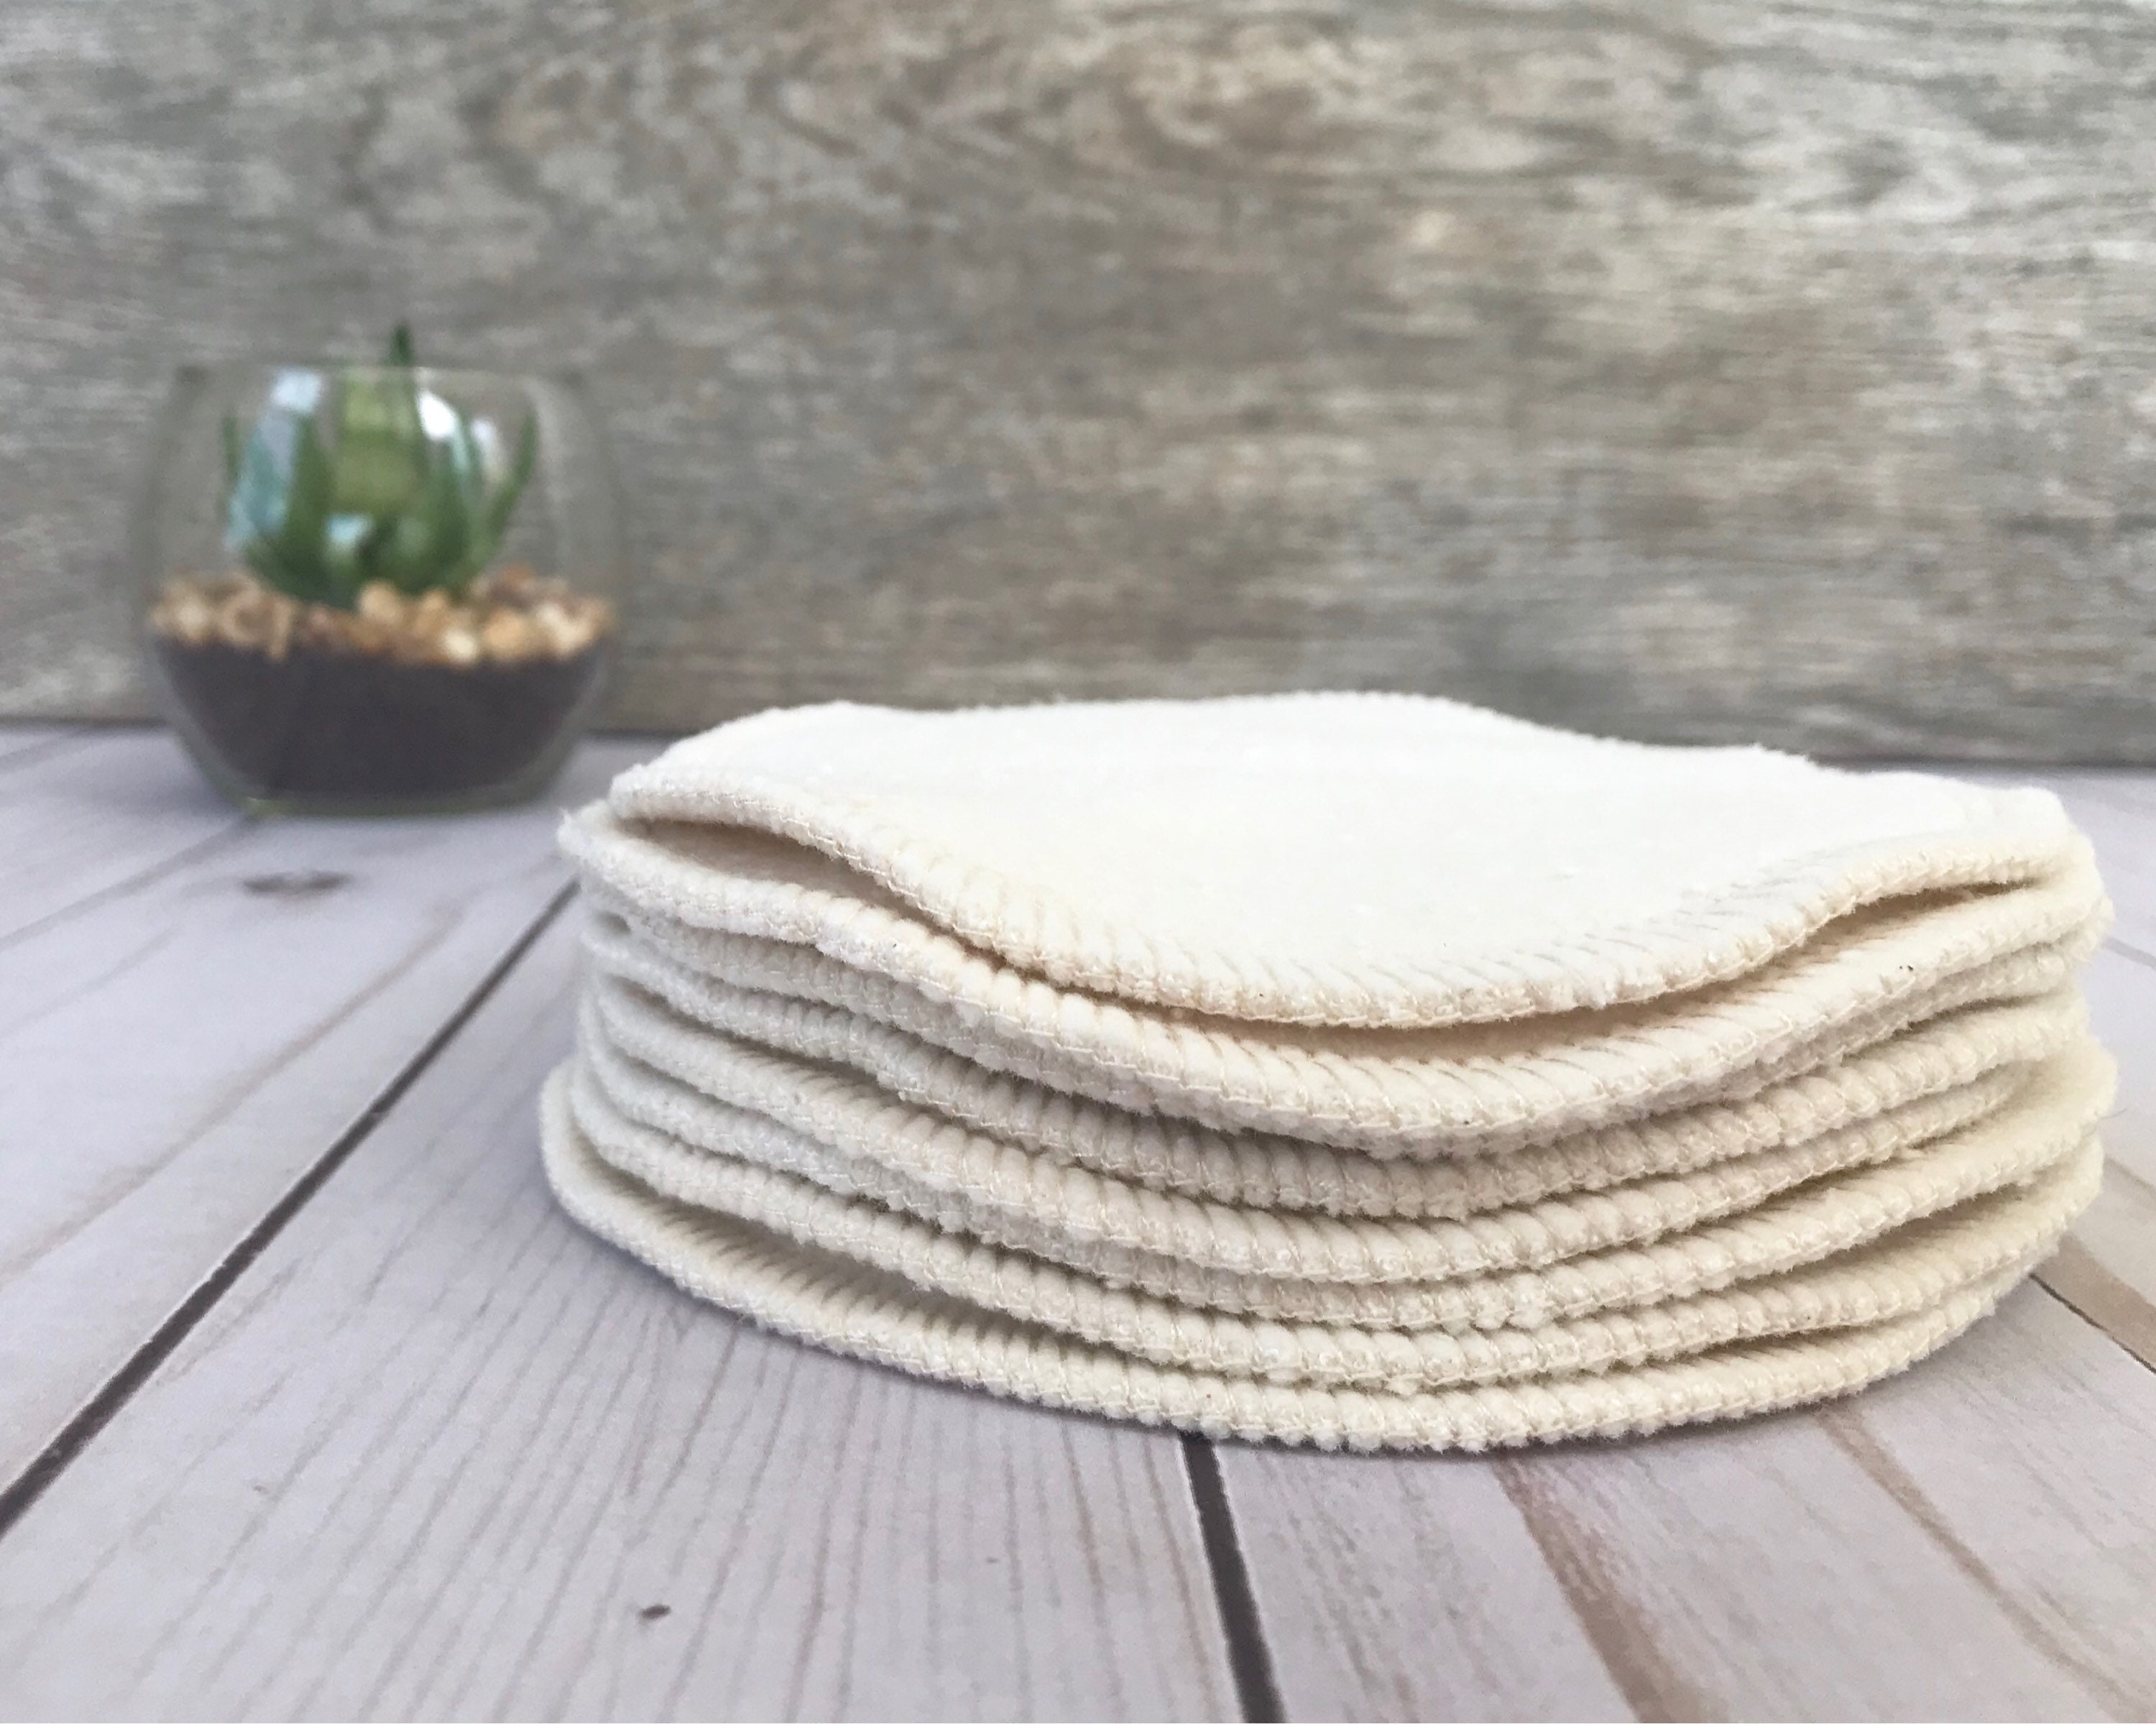 6pcs Pure Cotton Antibacterial Face Towel Square Block Edging